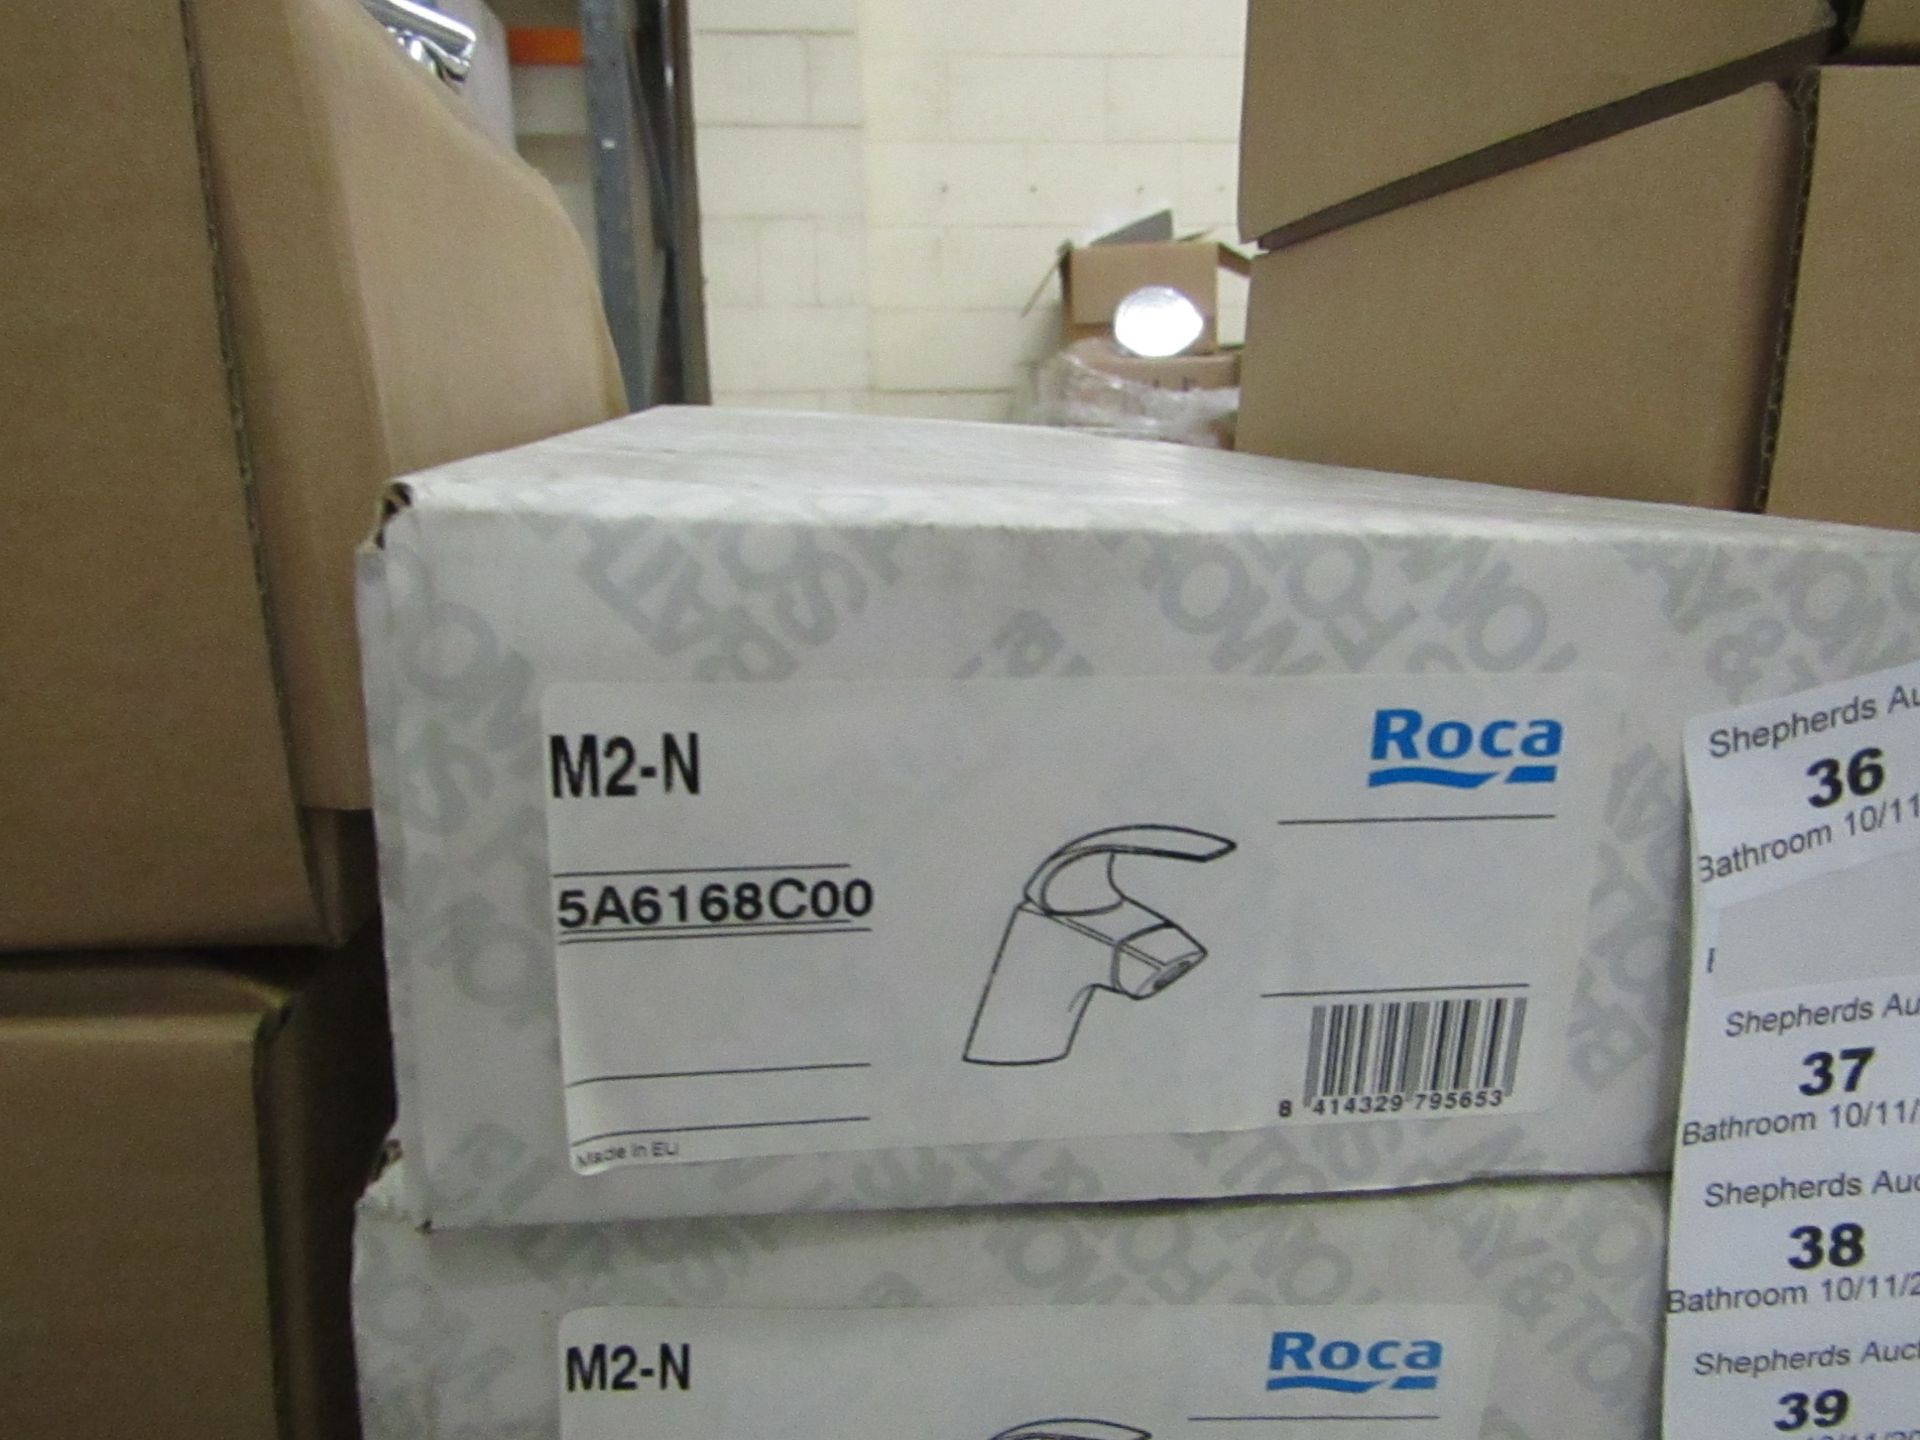 Roca Logica-N bidet/basin tap, unused and boxed, RRp £195 - Image 2 of 2